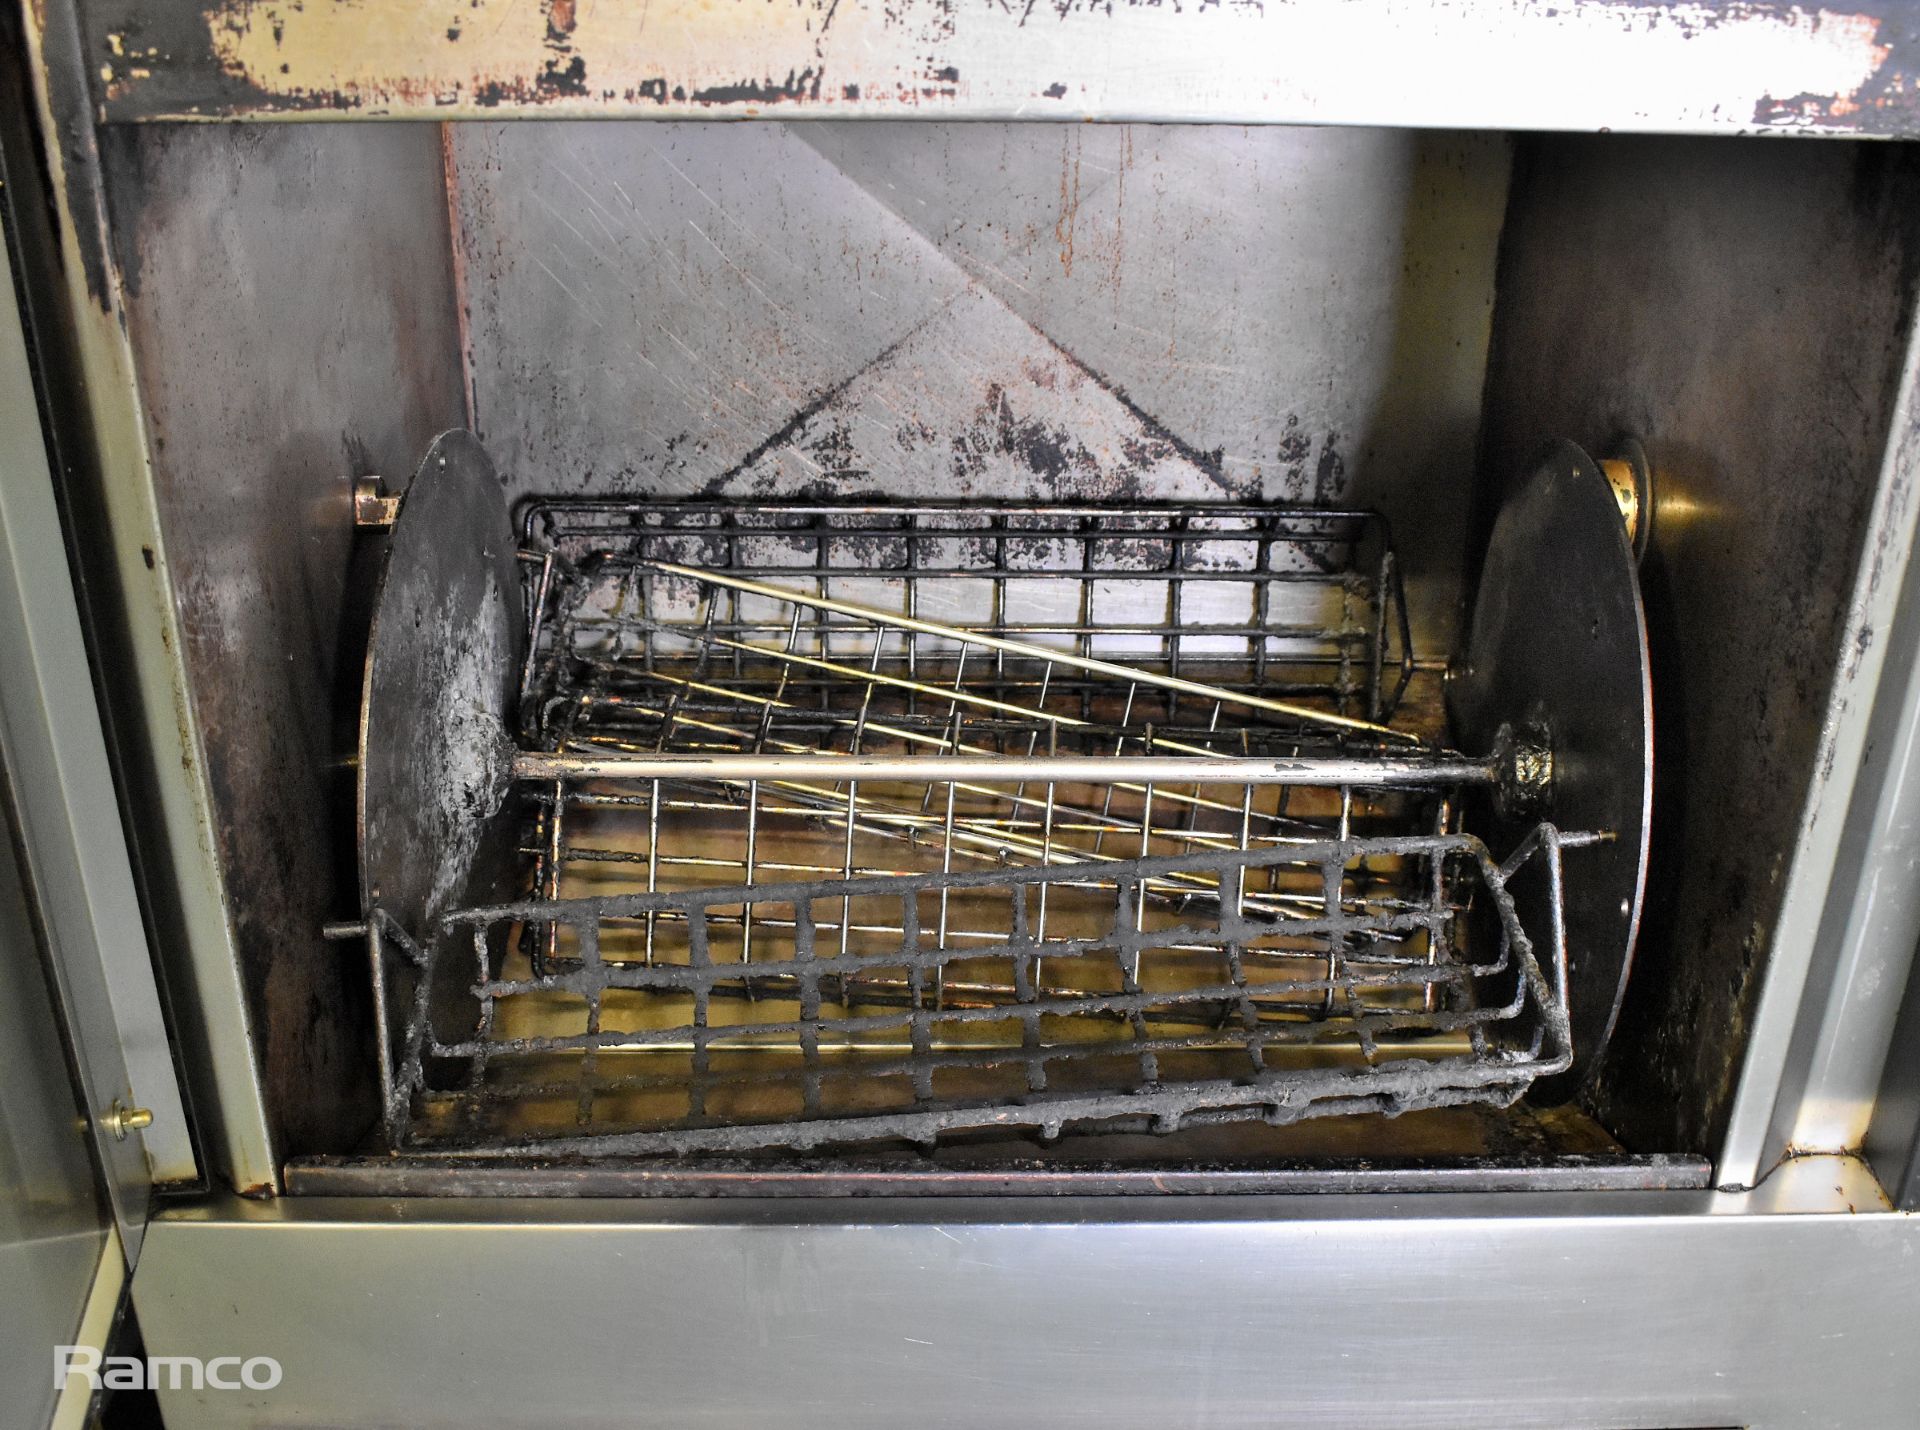 2x Fri-Jado TG110-M electric rotisserie ovens - 84 x 55 x 75cm, Stainless steel trolley - Image 6 of 7